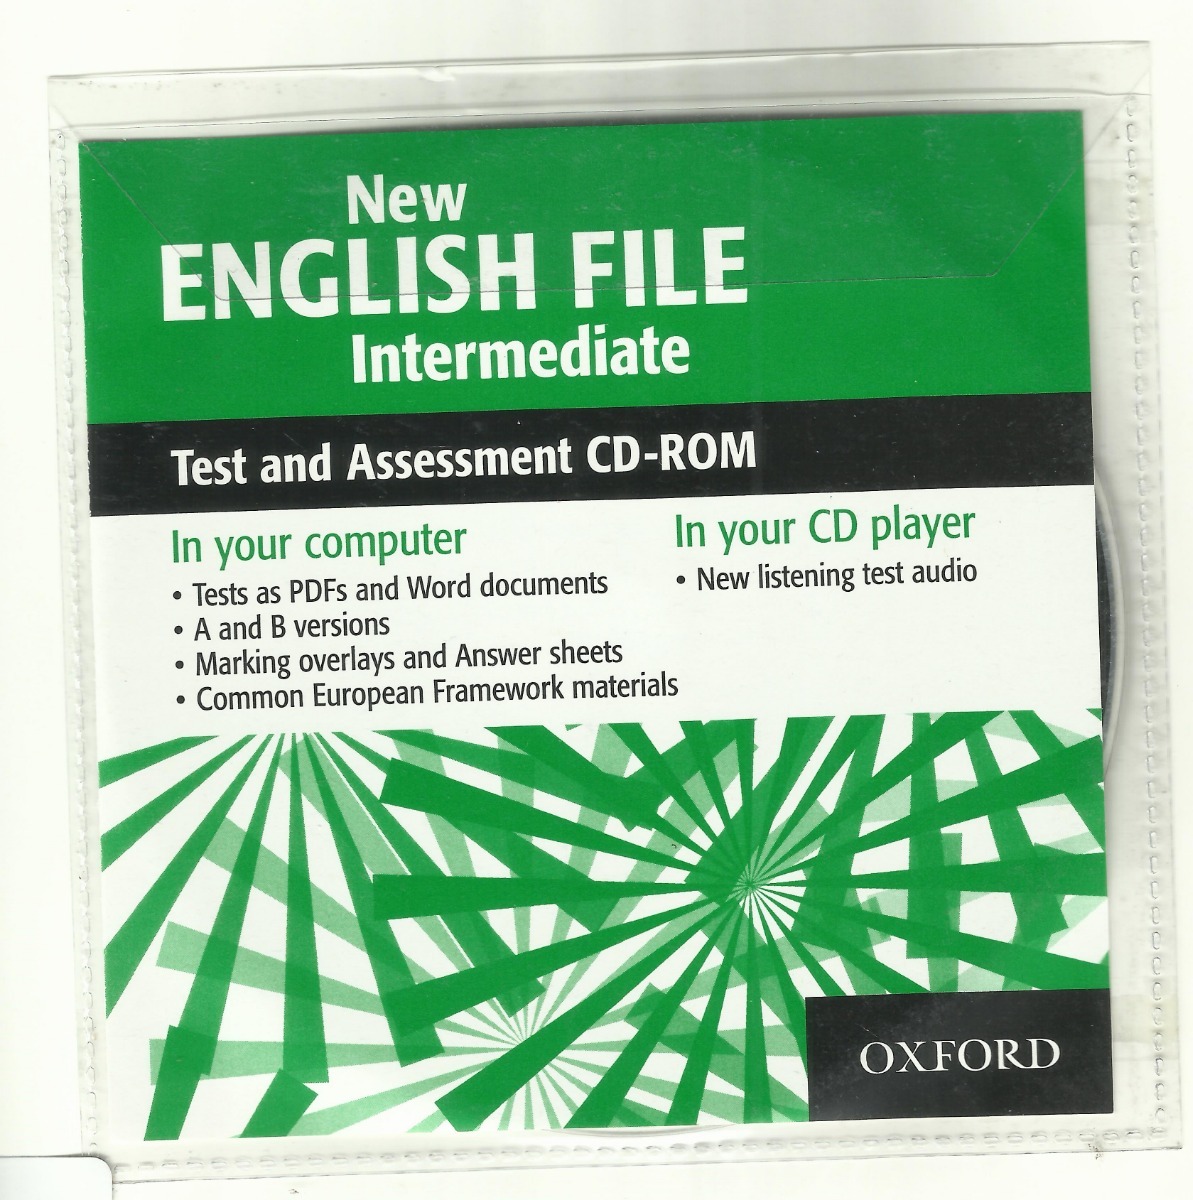 New English file Intermediate. Mood food English file Intermediate. English file Upper Intermediate Tests. 5.6 New English file Intermediate. English file upper intermediate test